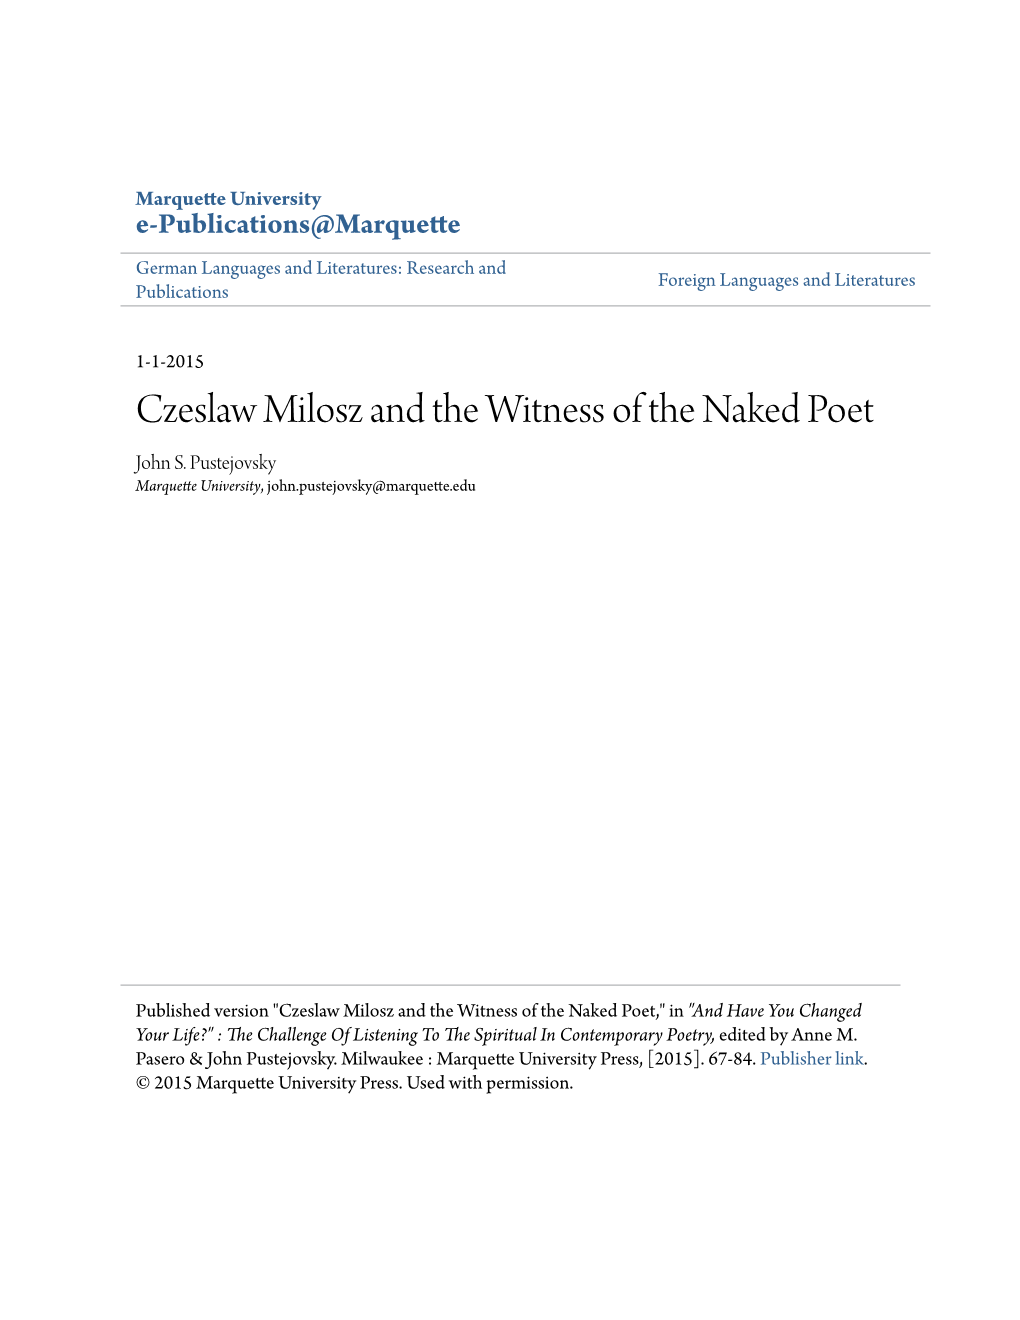 Czeslaw Milosz and the Witness of the Naked Poet John S